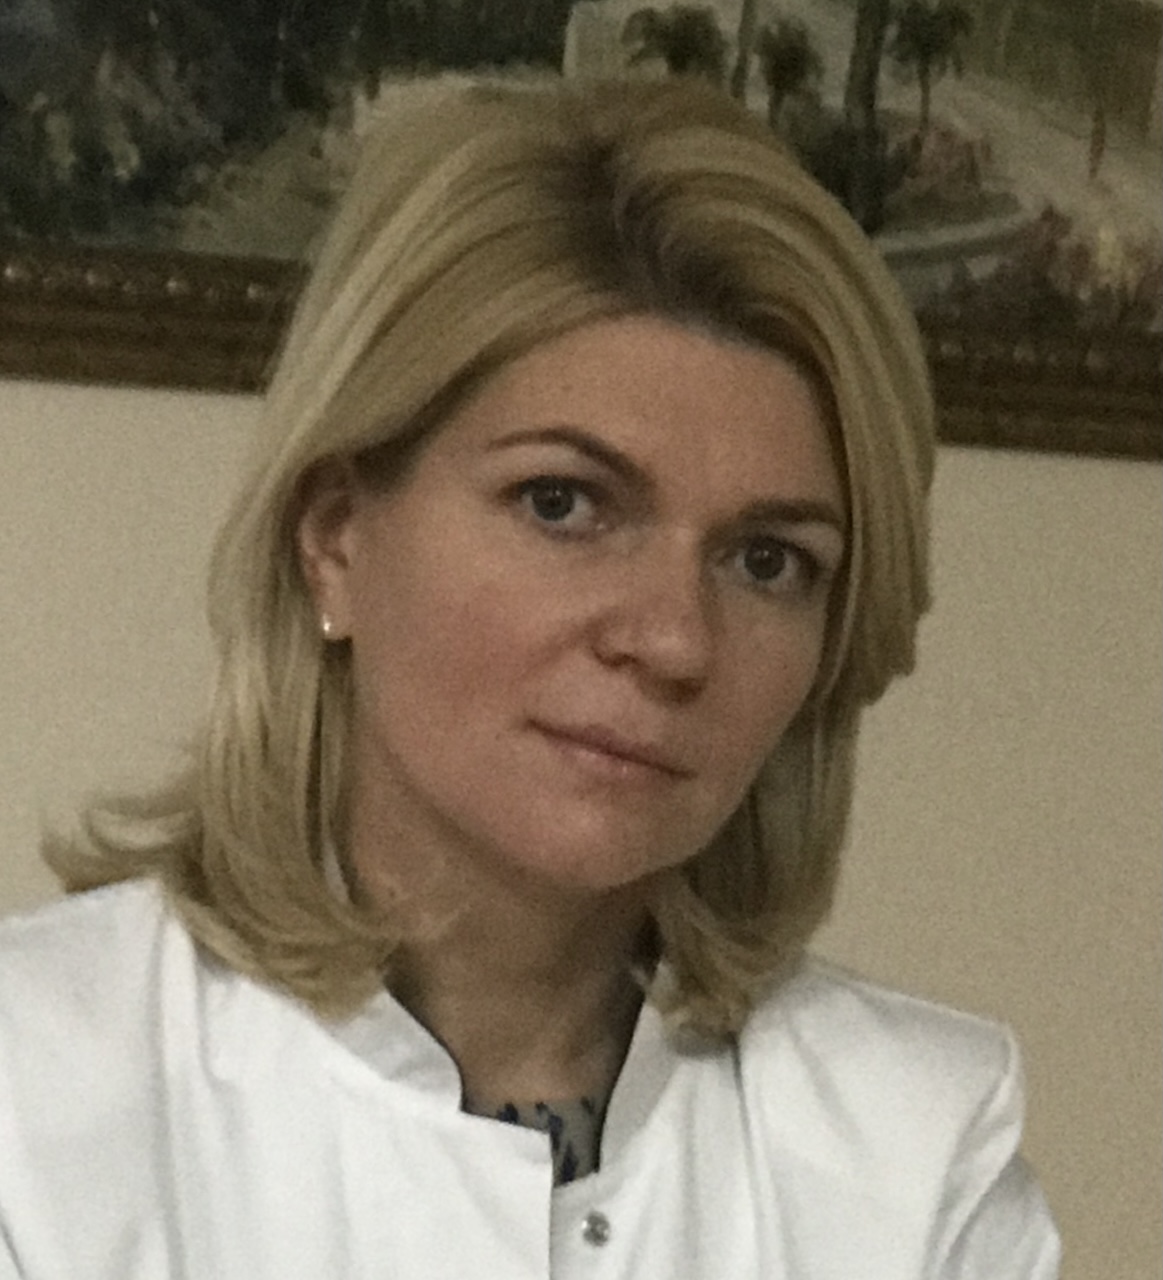 Милованова Светлана Юрьевна